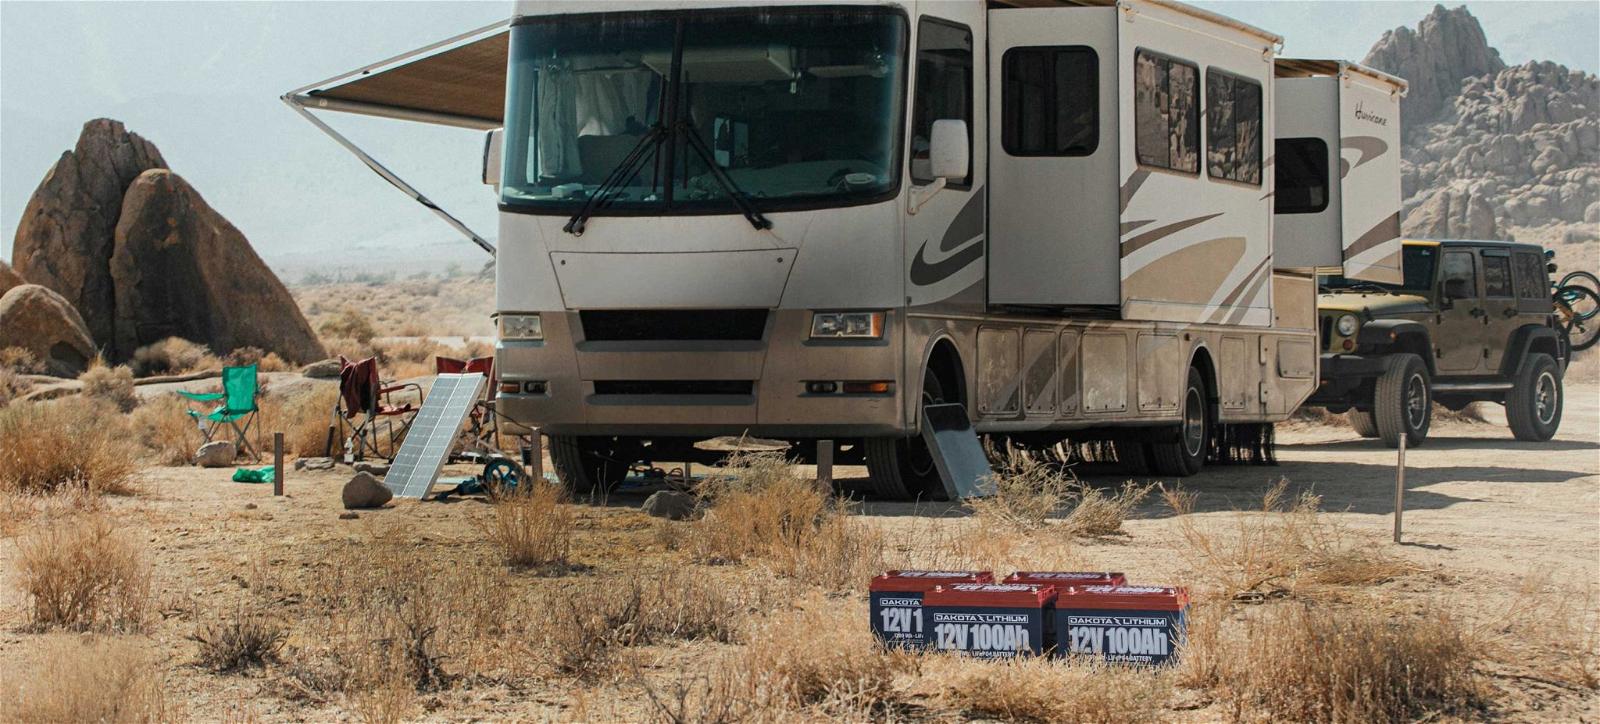 10 Must Have RV Appliances - RV/Marine/Truck/Camping Blog